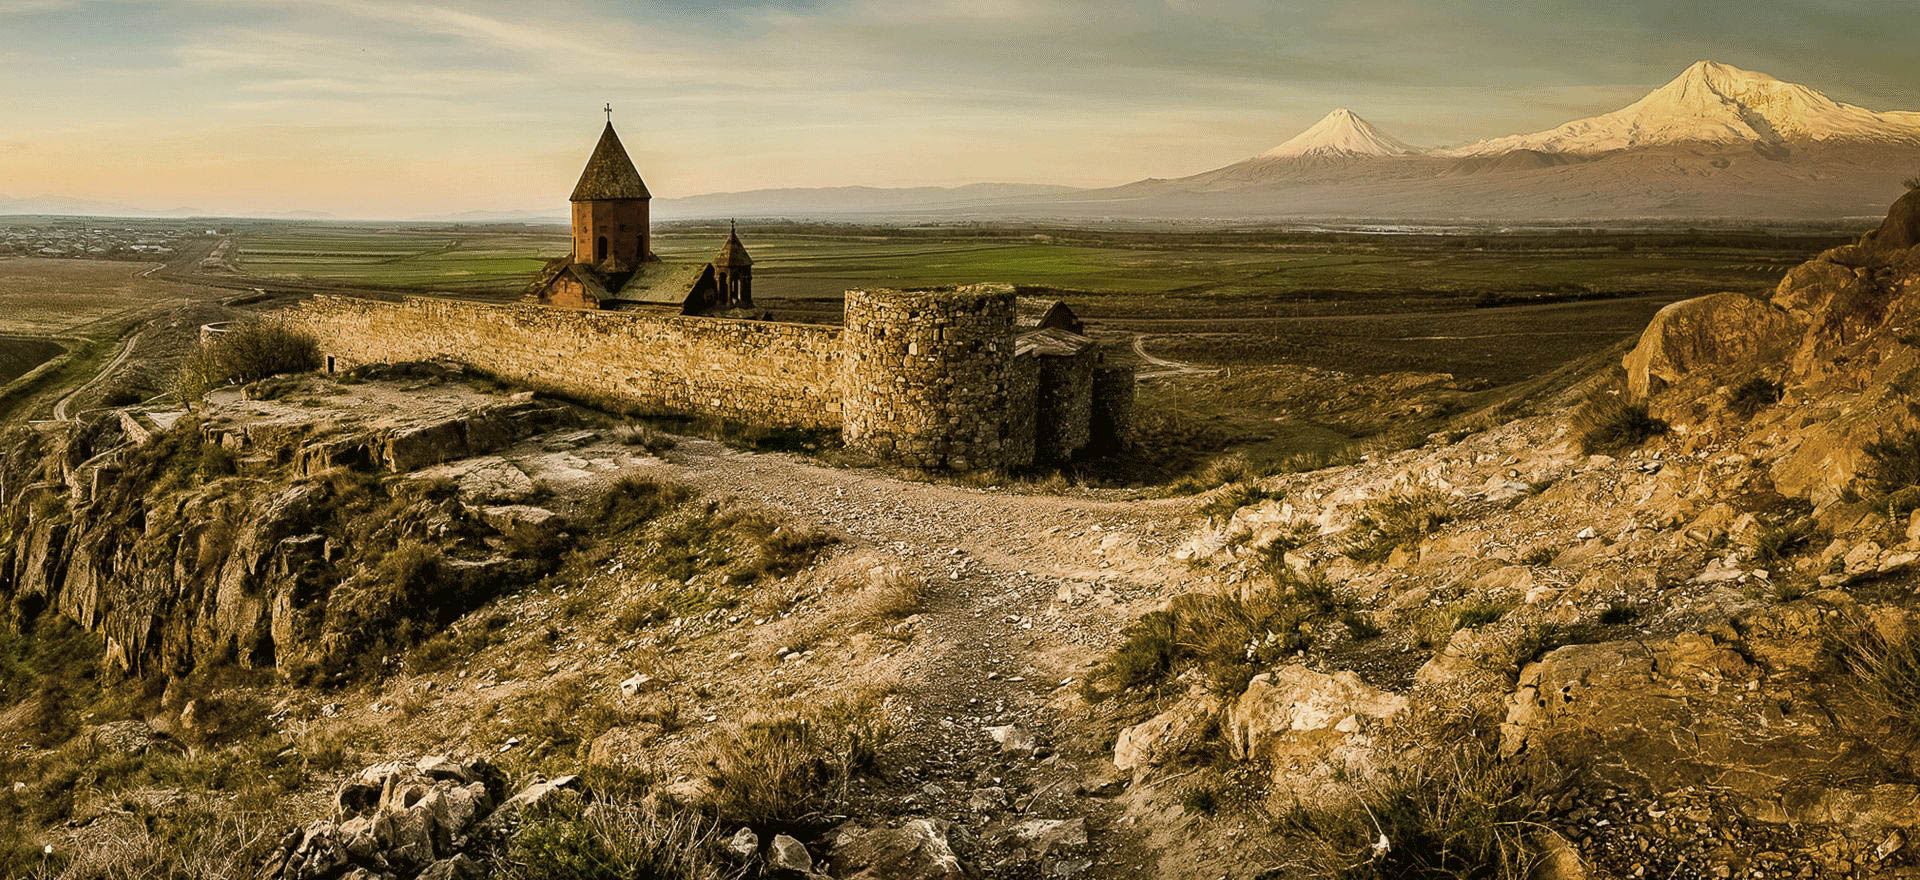 Ancient monastery - Armenia holidays